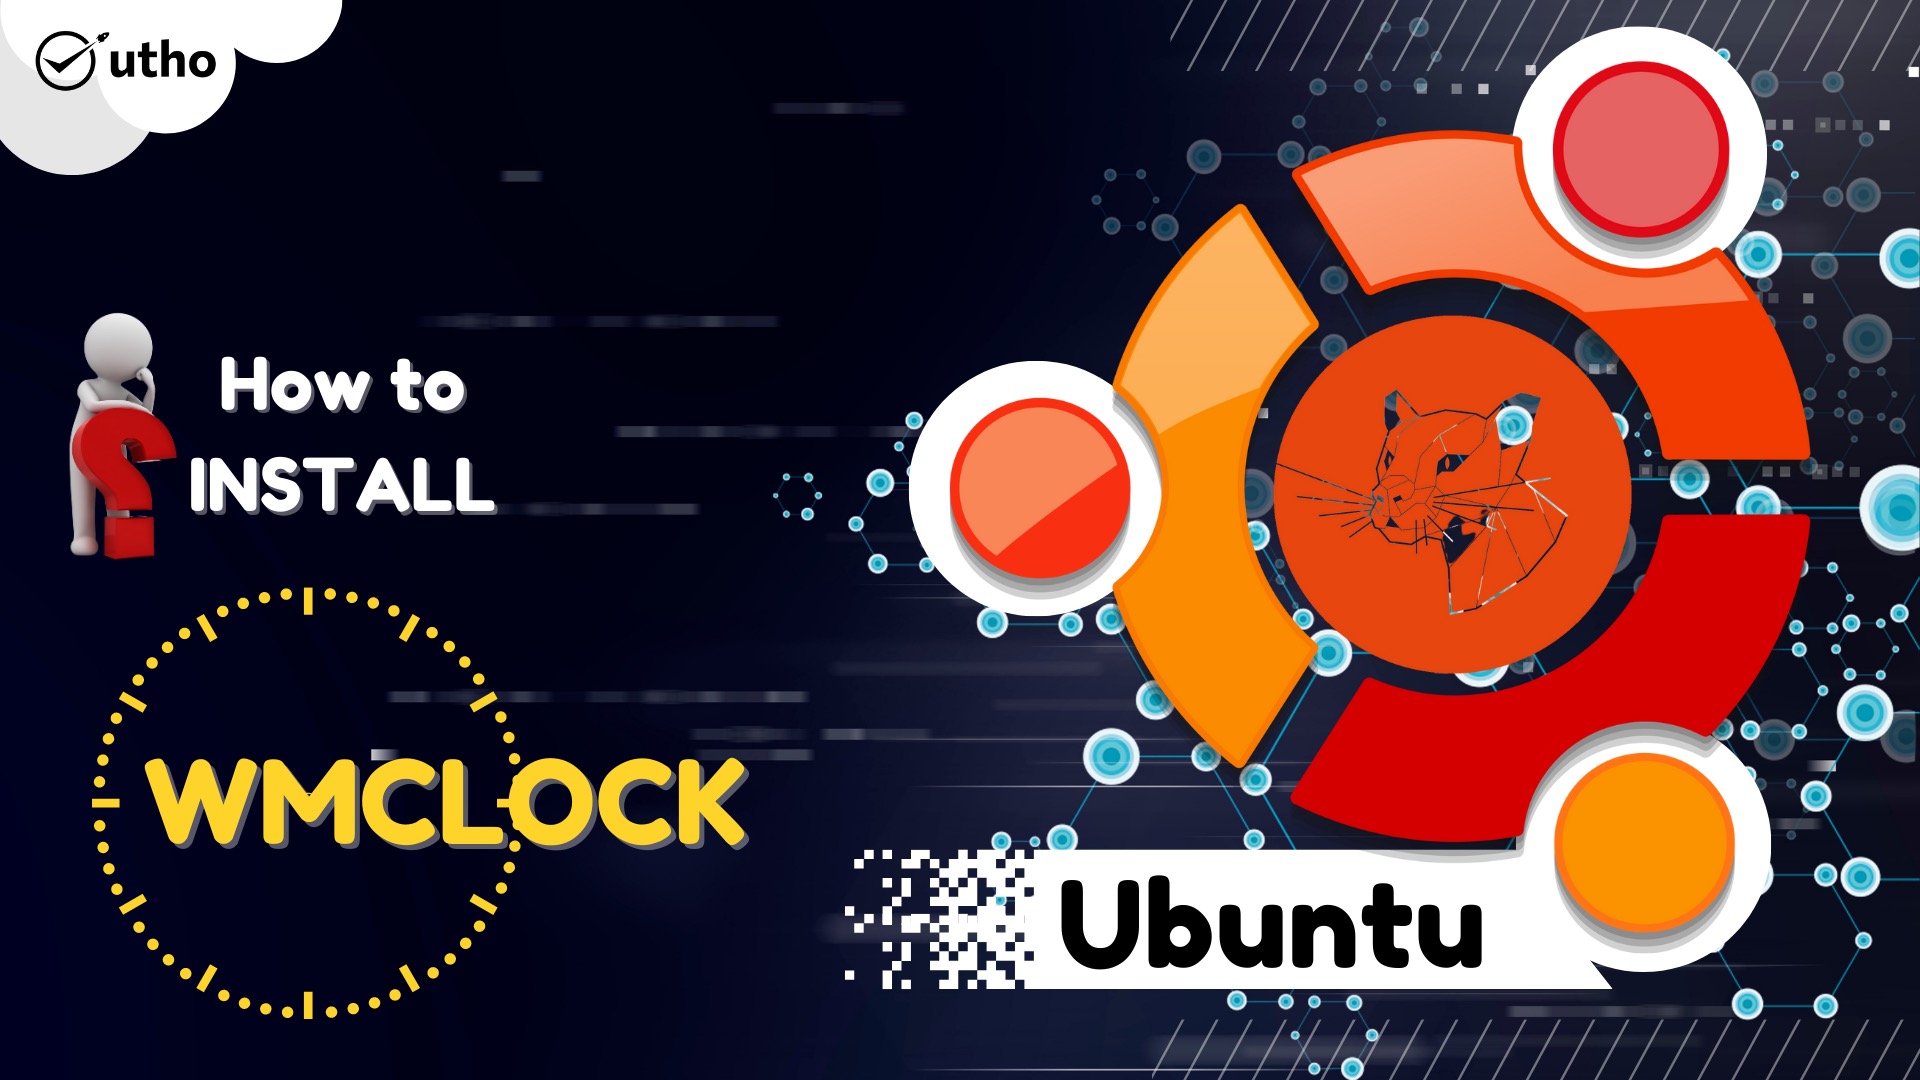 How to Install wmclock on Ubuntu 20.04